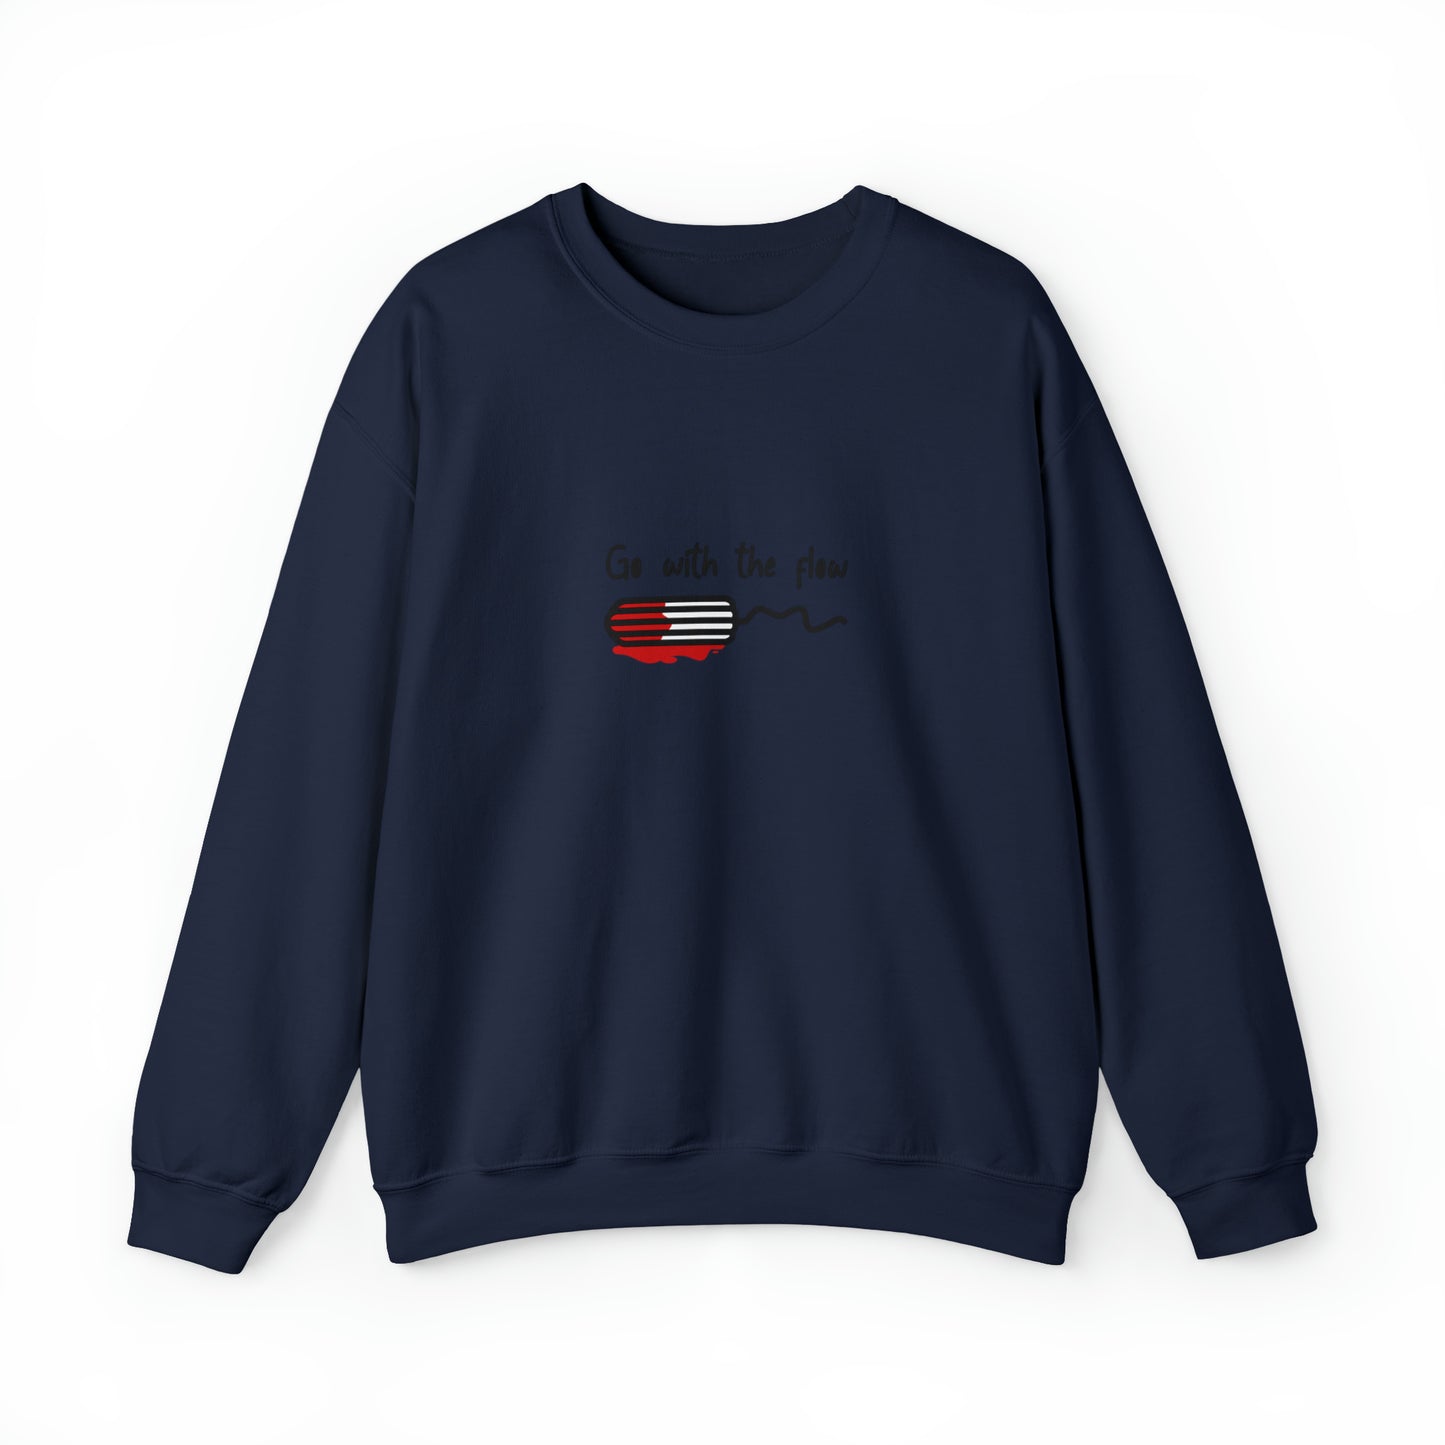 Custom Parody Crewneck Sweatshirt, Go with the Flow Design